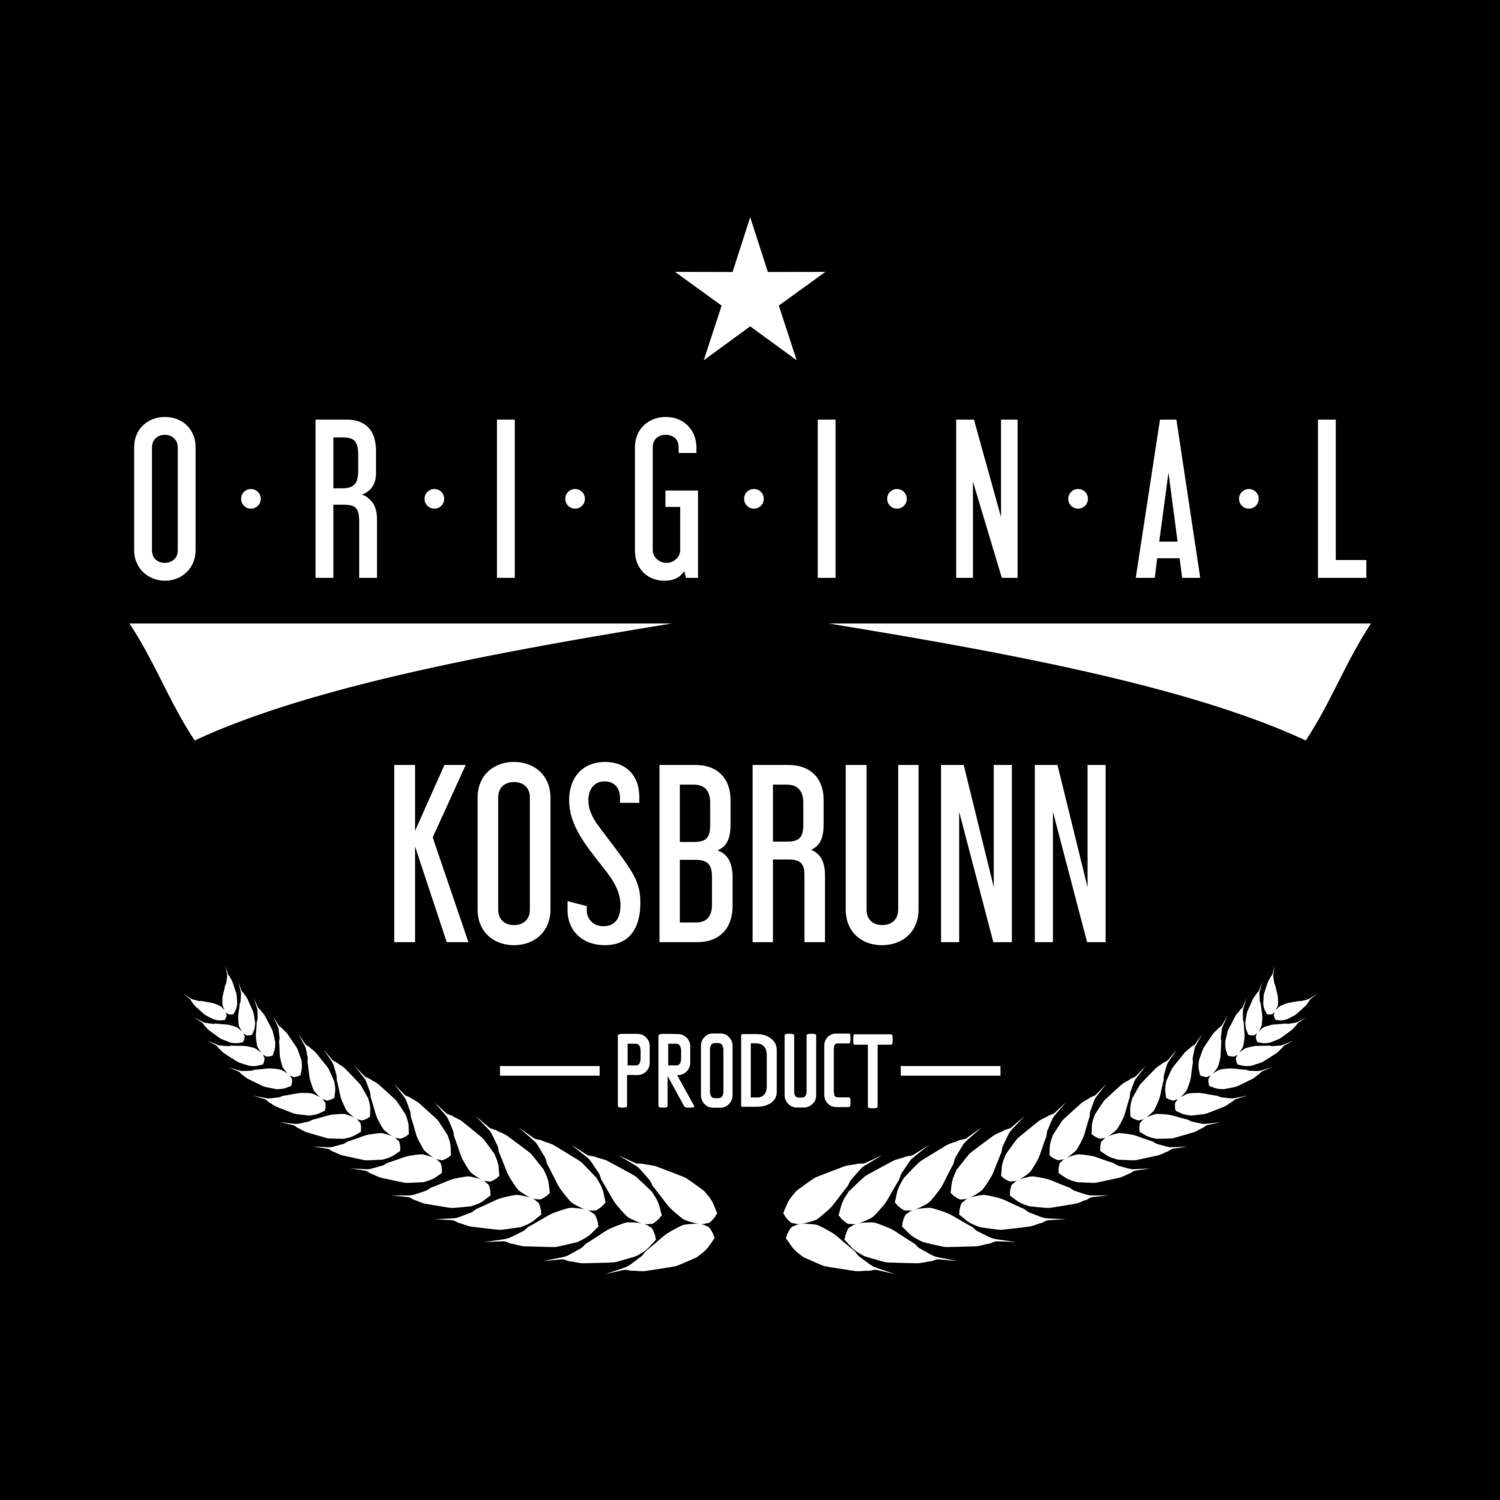 Kosbrunn T-Shirt »Original Product«